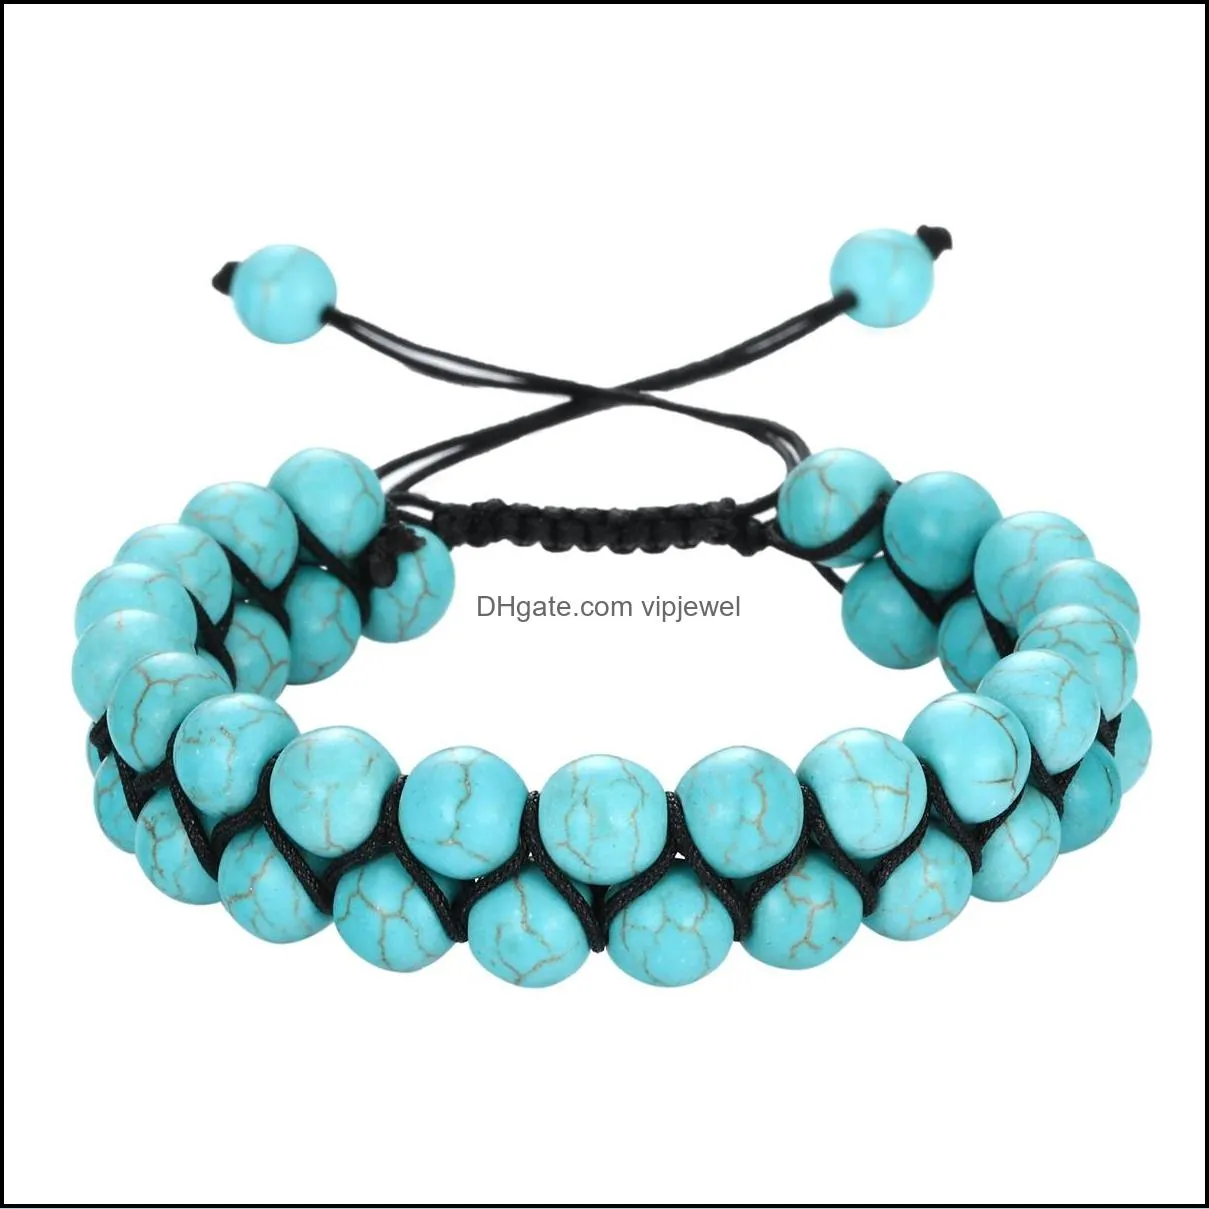 bead chakra bracelet 7 chakras healing crystals bracelet yoga stone beads bracelets meditation relax anxiety bangle for womens mens